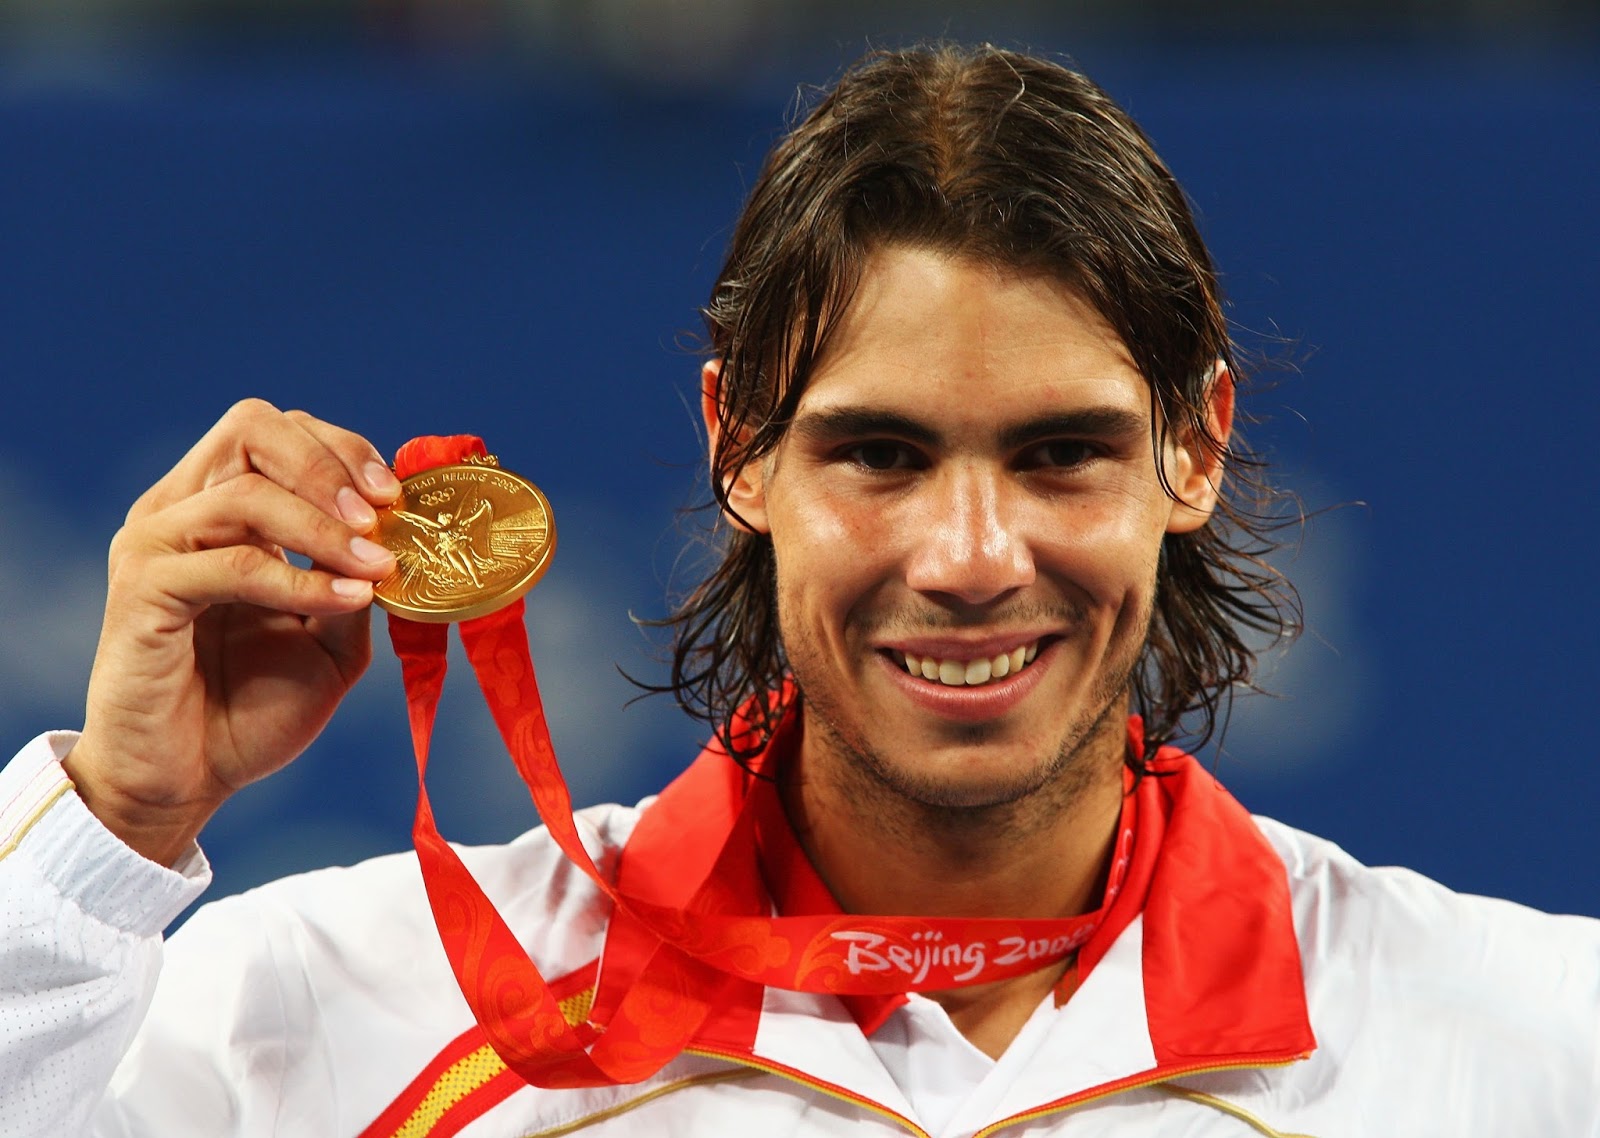 16142_Rafael_Nadal-Men8s_singles_tennis_match_during_2008_Beijing_Olympic_Games-059_122_57lo.jpg